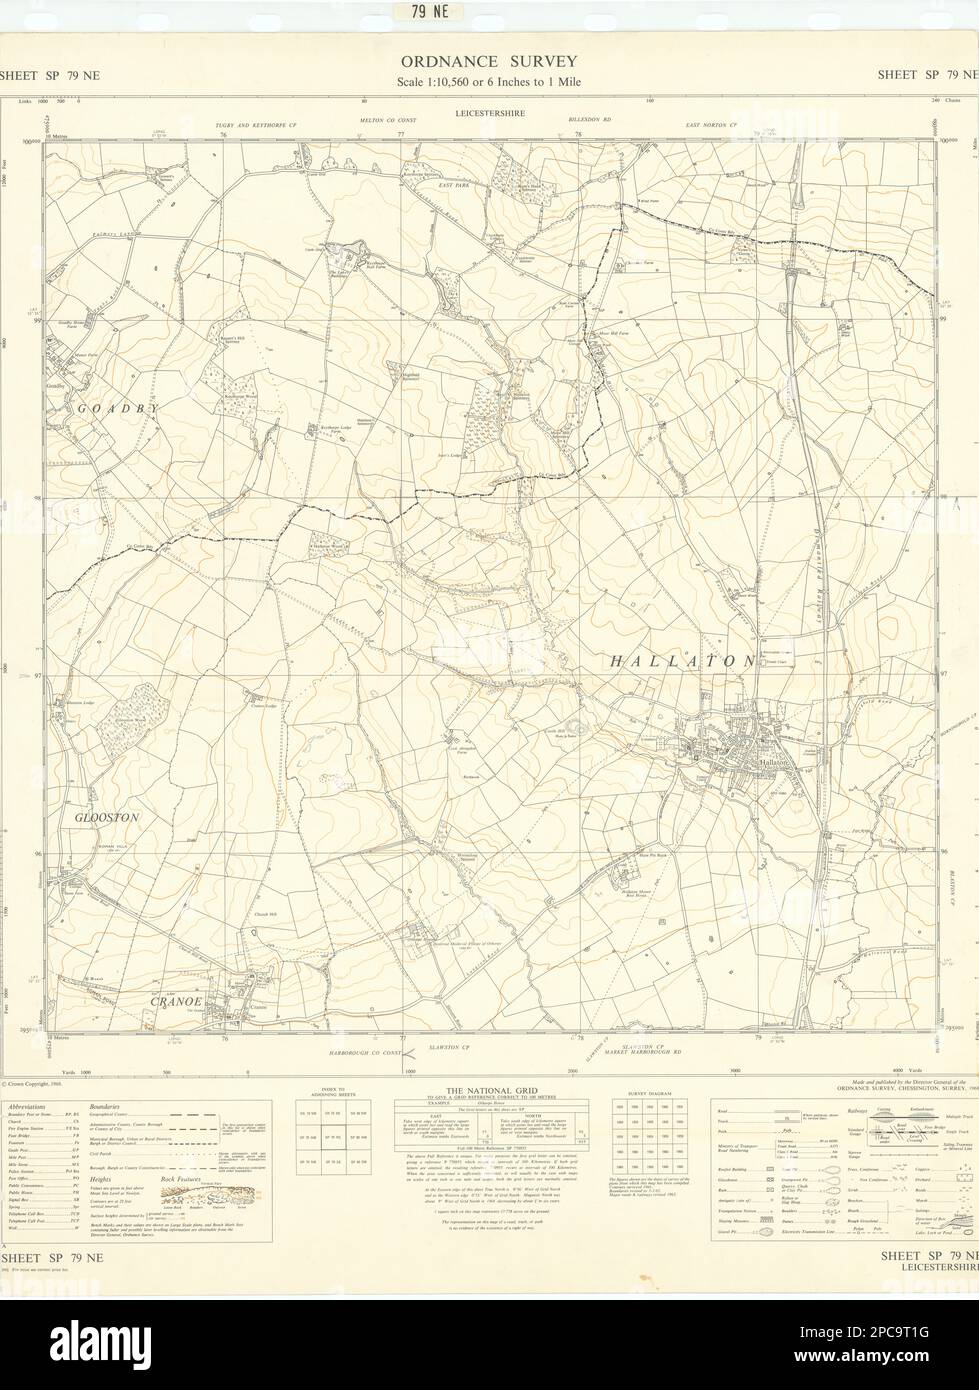 Ordnance Survey Sheet SP79NE Leicestershire Hallaton Cranoe 1968 mapa antiguo Foto de stock